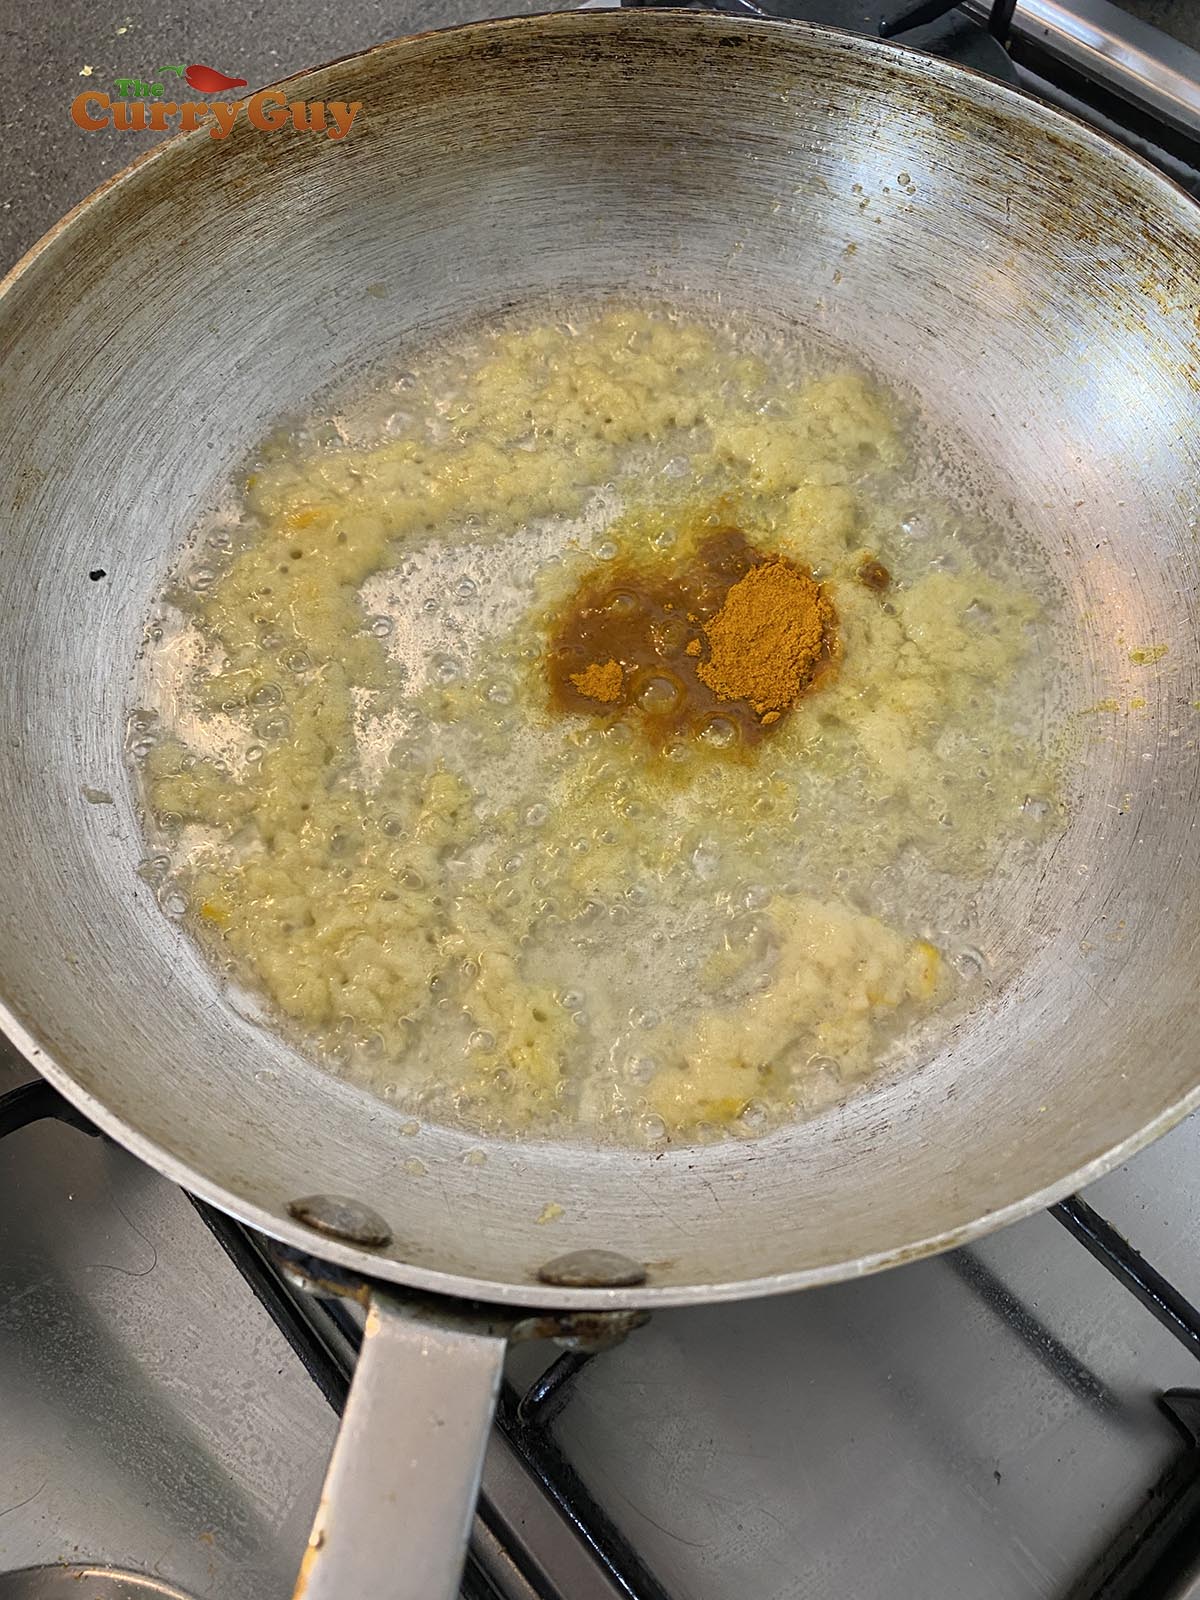 Adding turmeric to the pan